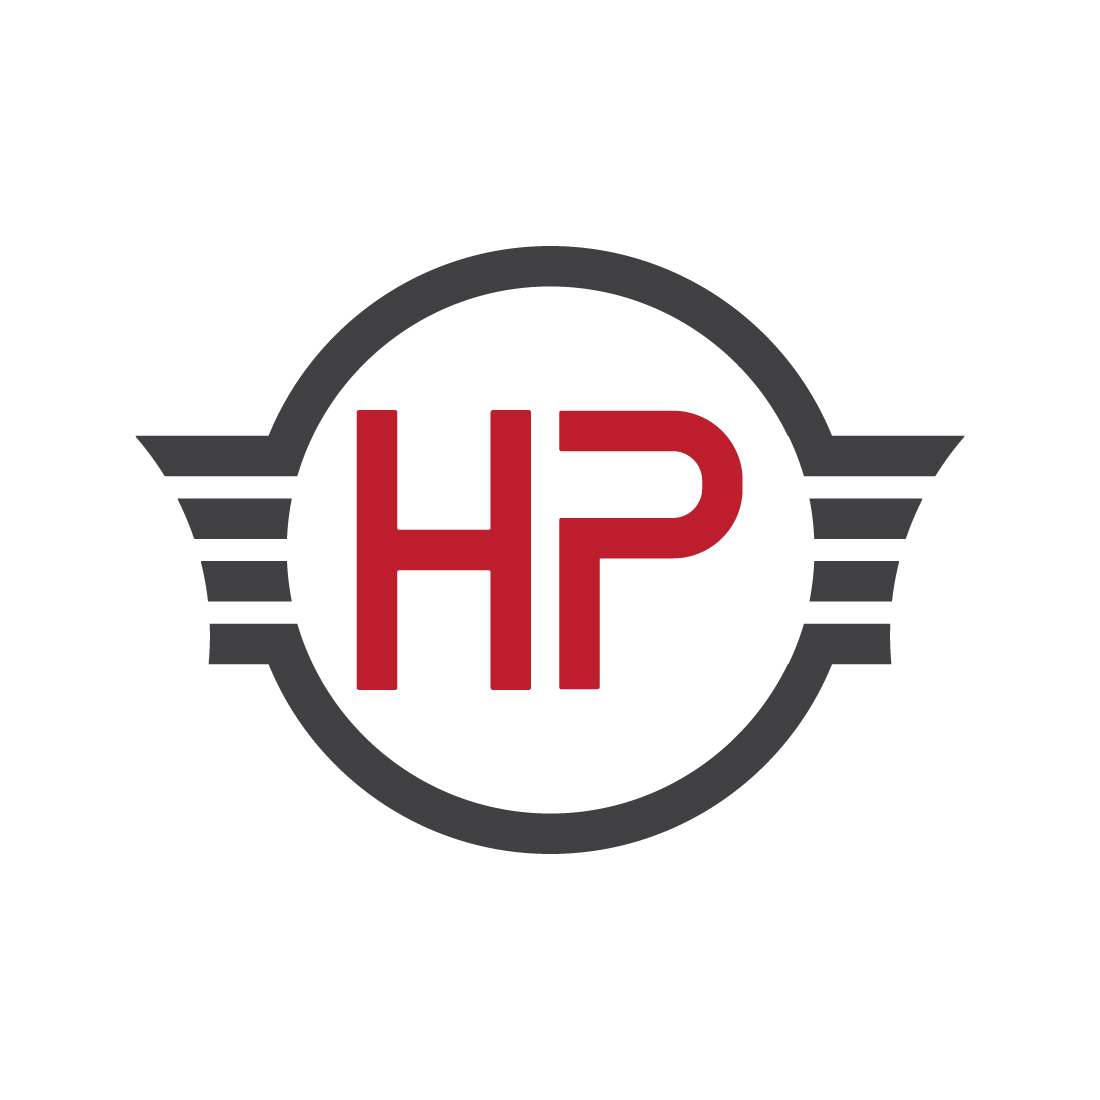 HP letters logo design vector images HP logo monogram best identity preview image.